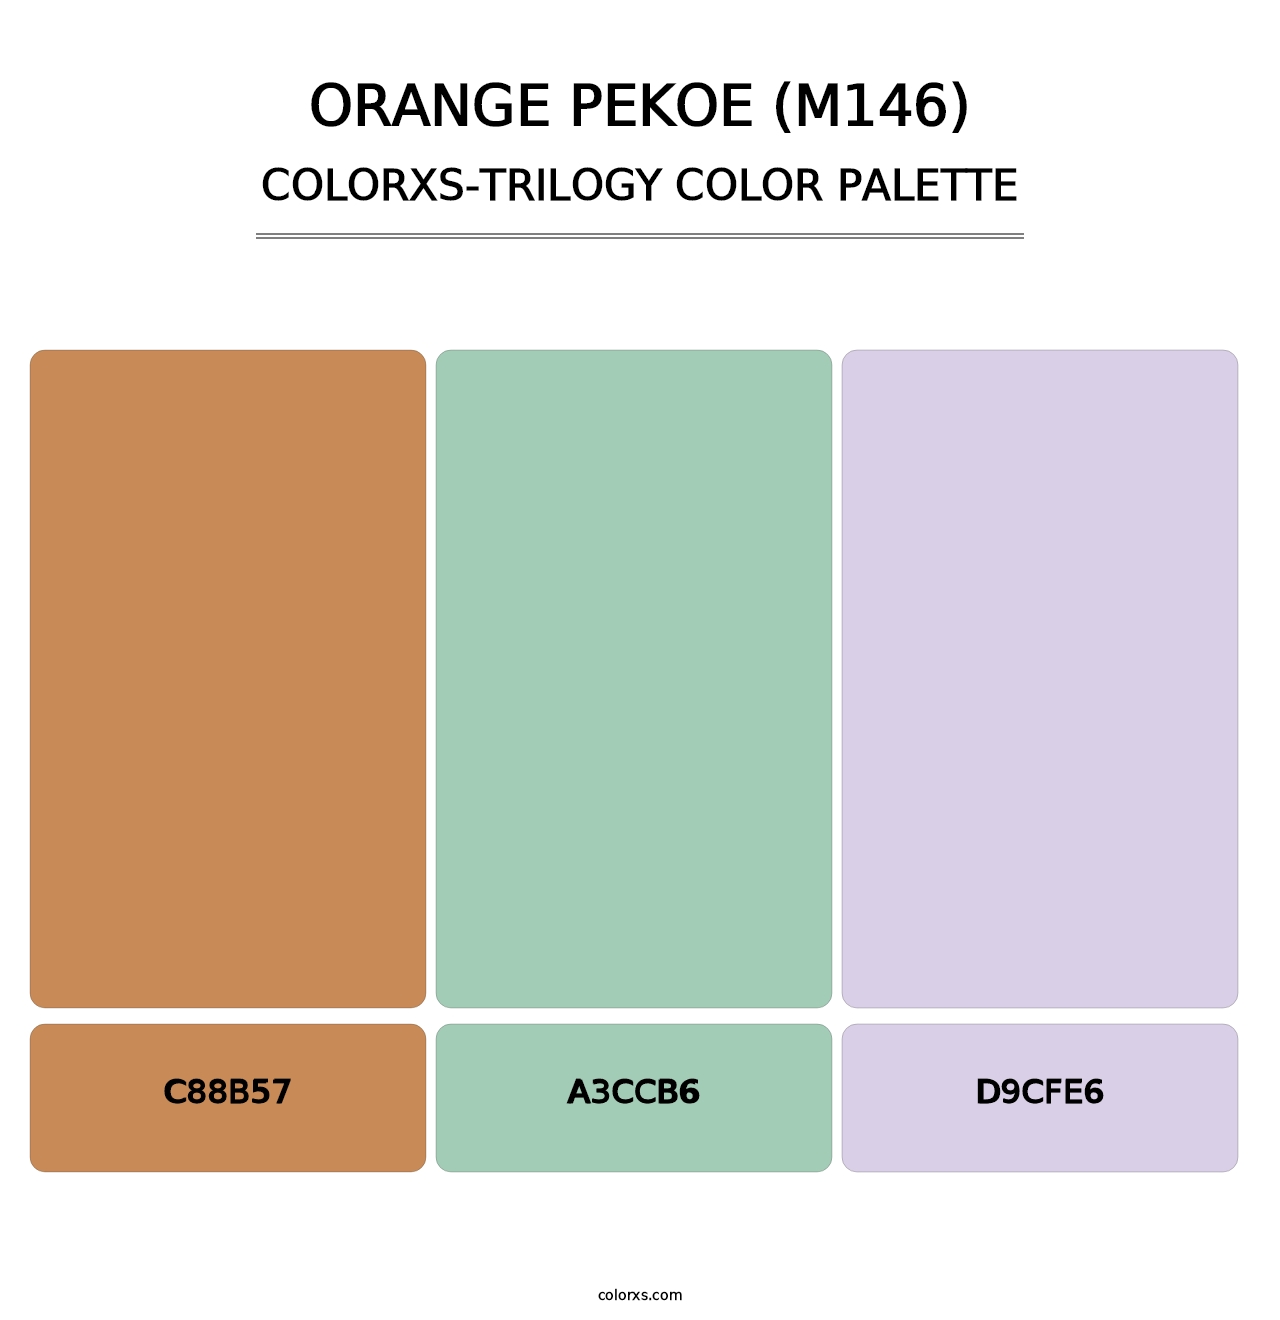 Orange Pekoe (M146) - Colorxs Trilogy Palette